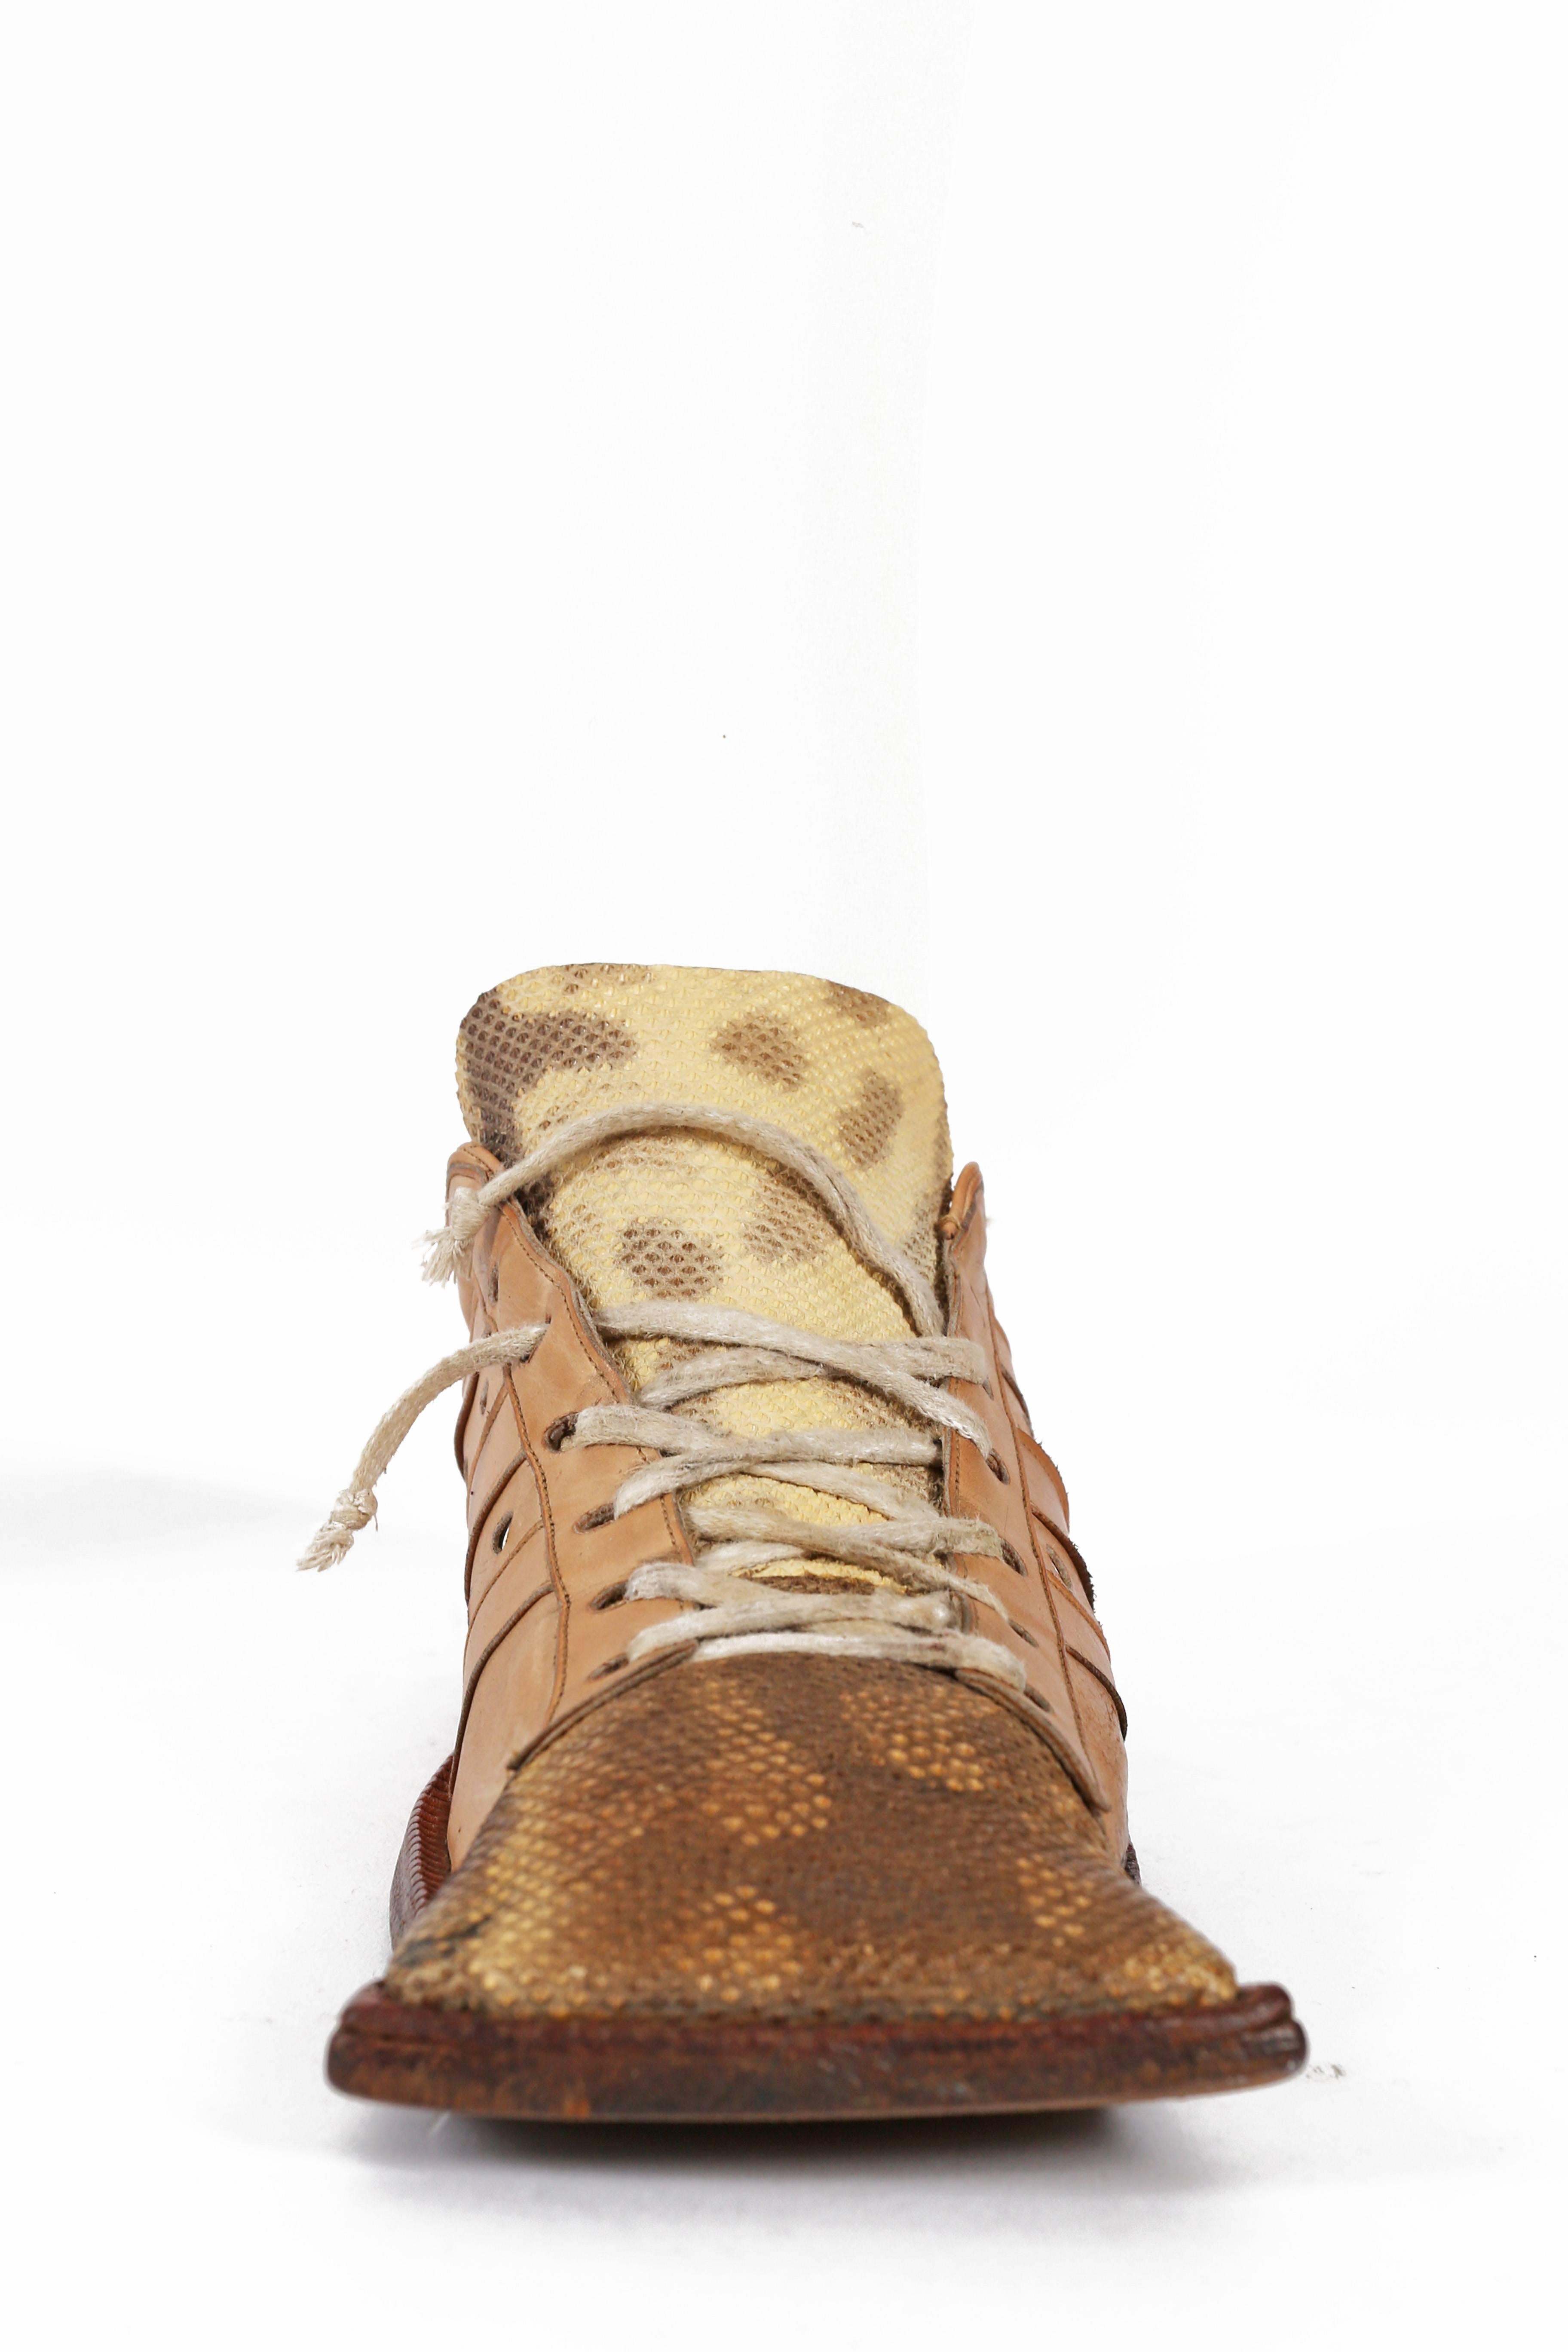 Brown Worlds End 'Savages' hammerhead lizard skin shoes, circa 1982